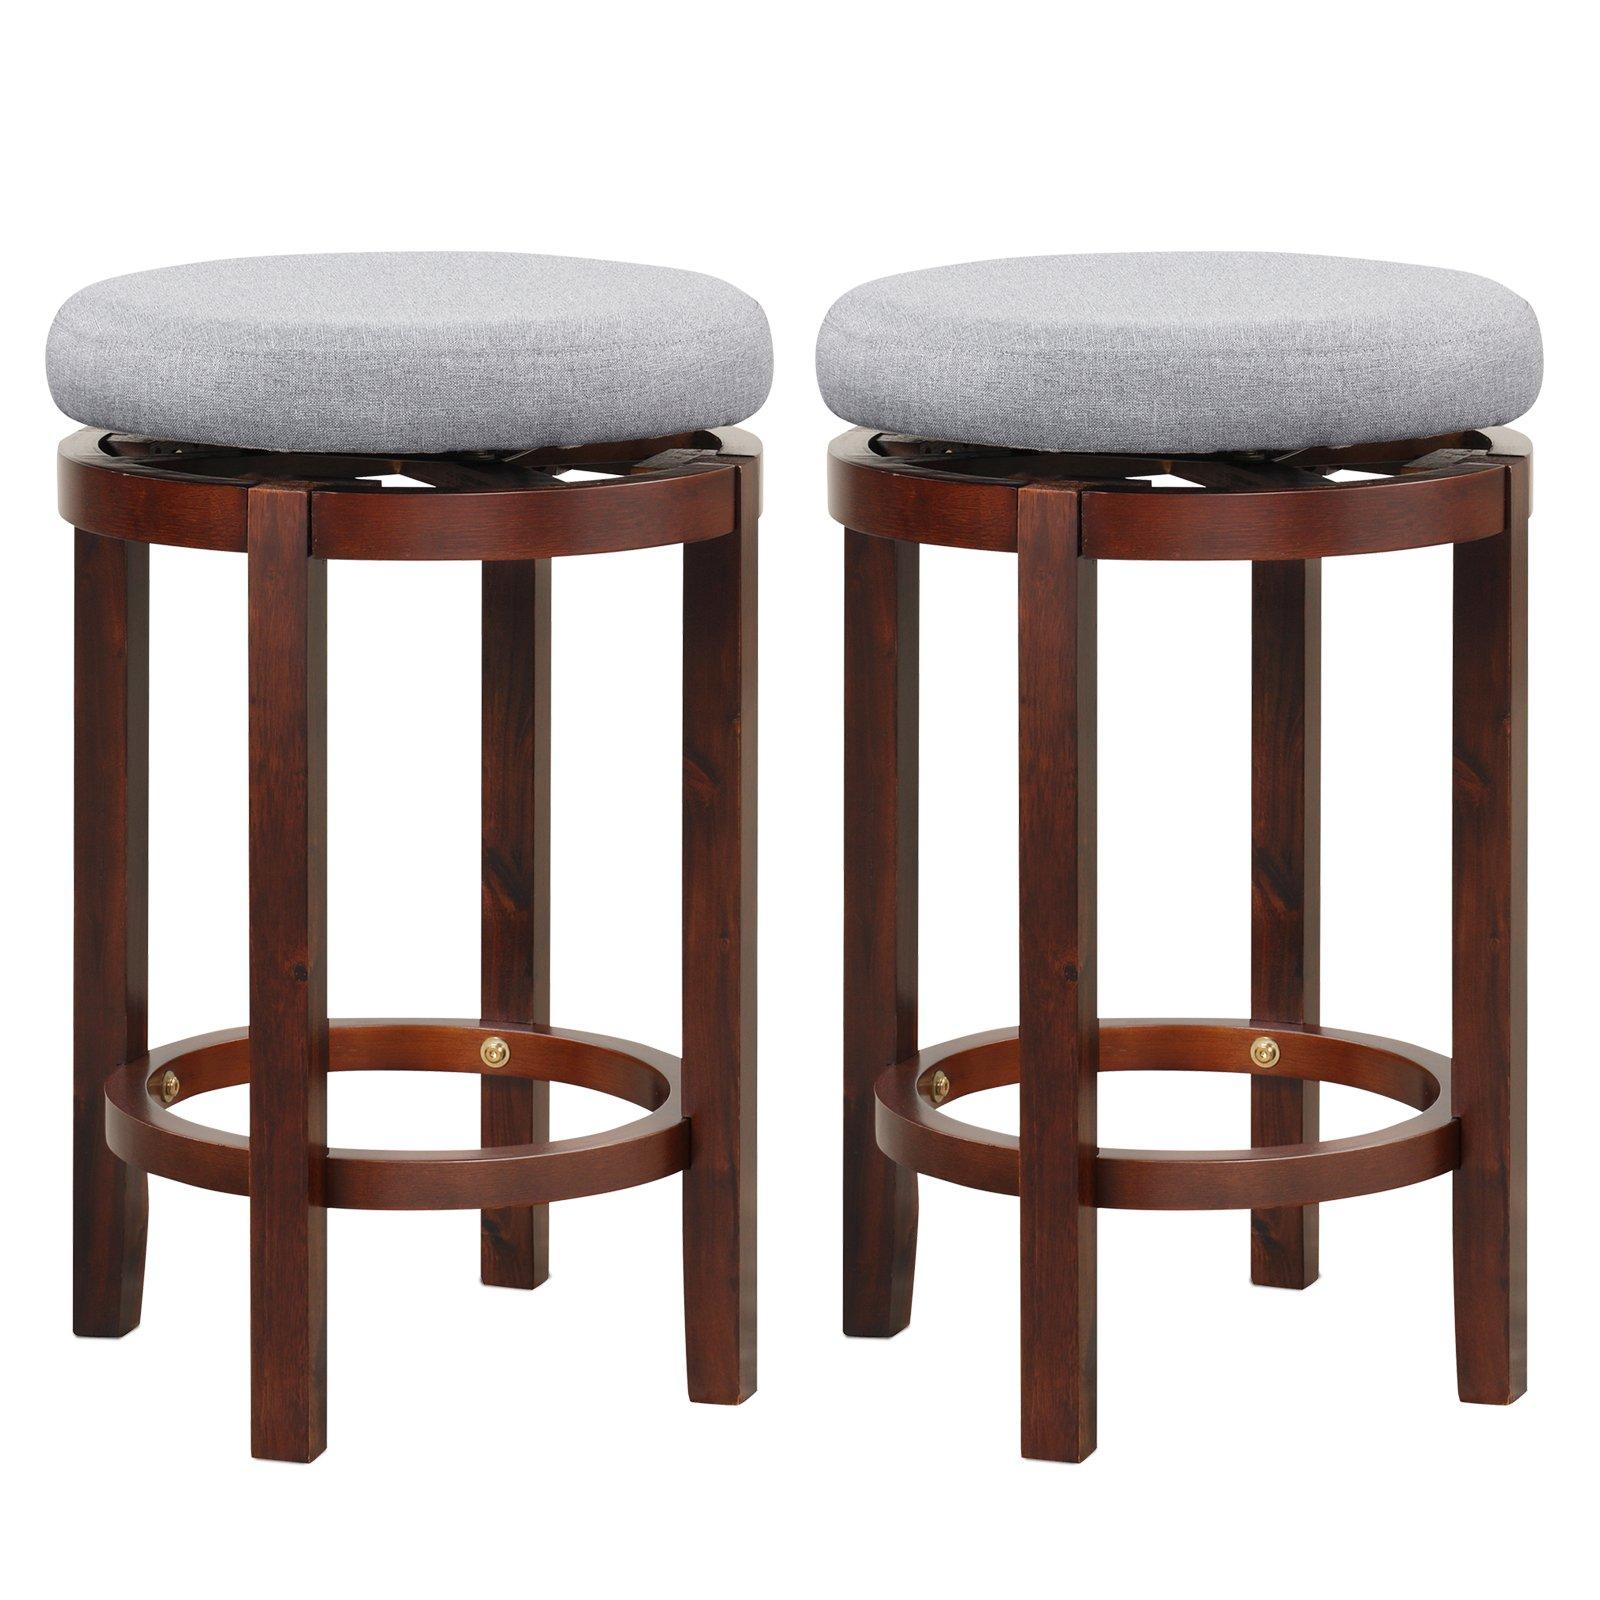 Set of 2 Bar Stools Wooden Counter Height Chair 360deg Swivel Kitchen Padded Seat